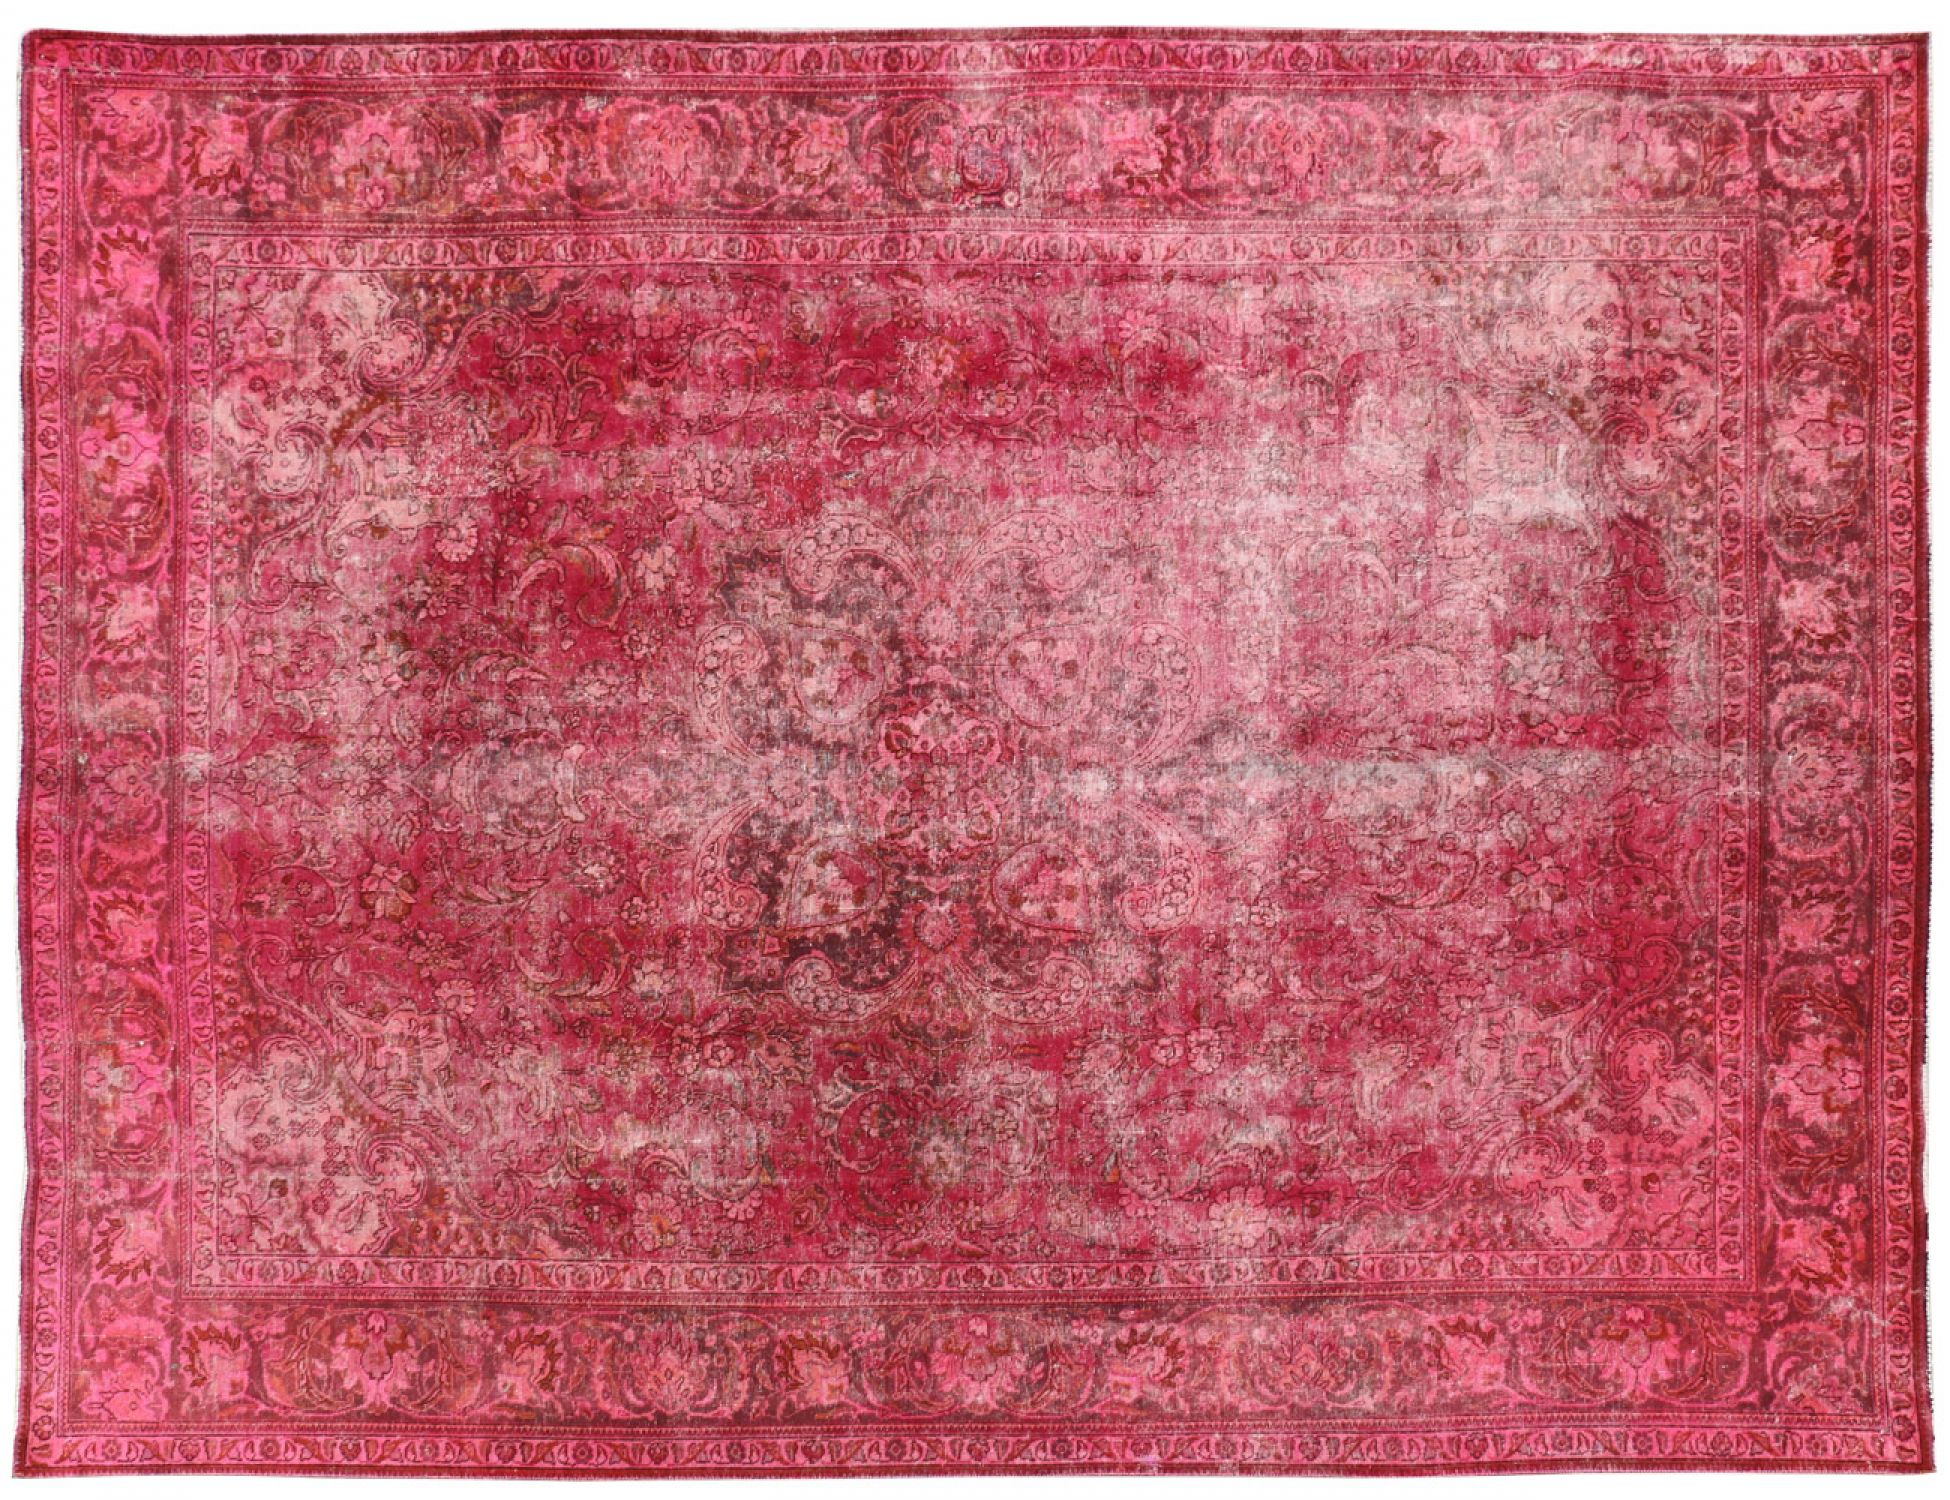  Vintage Tapis  rouge <br/>394 x 304 cm